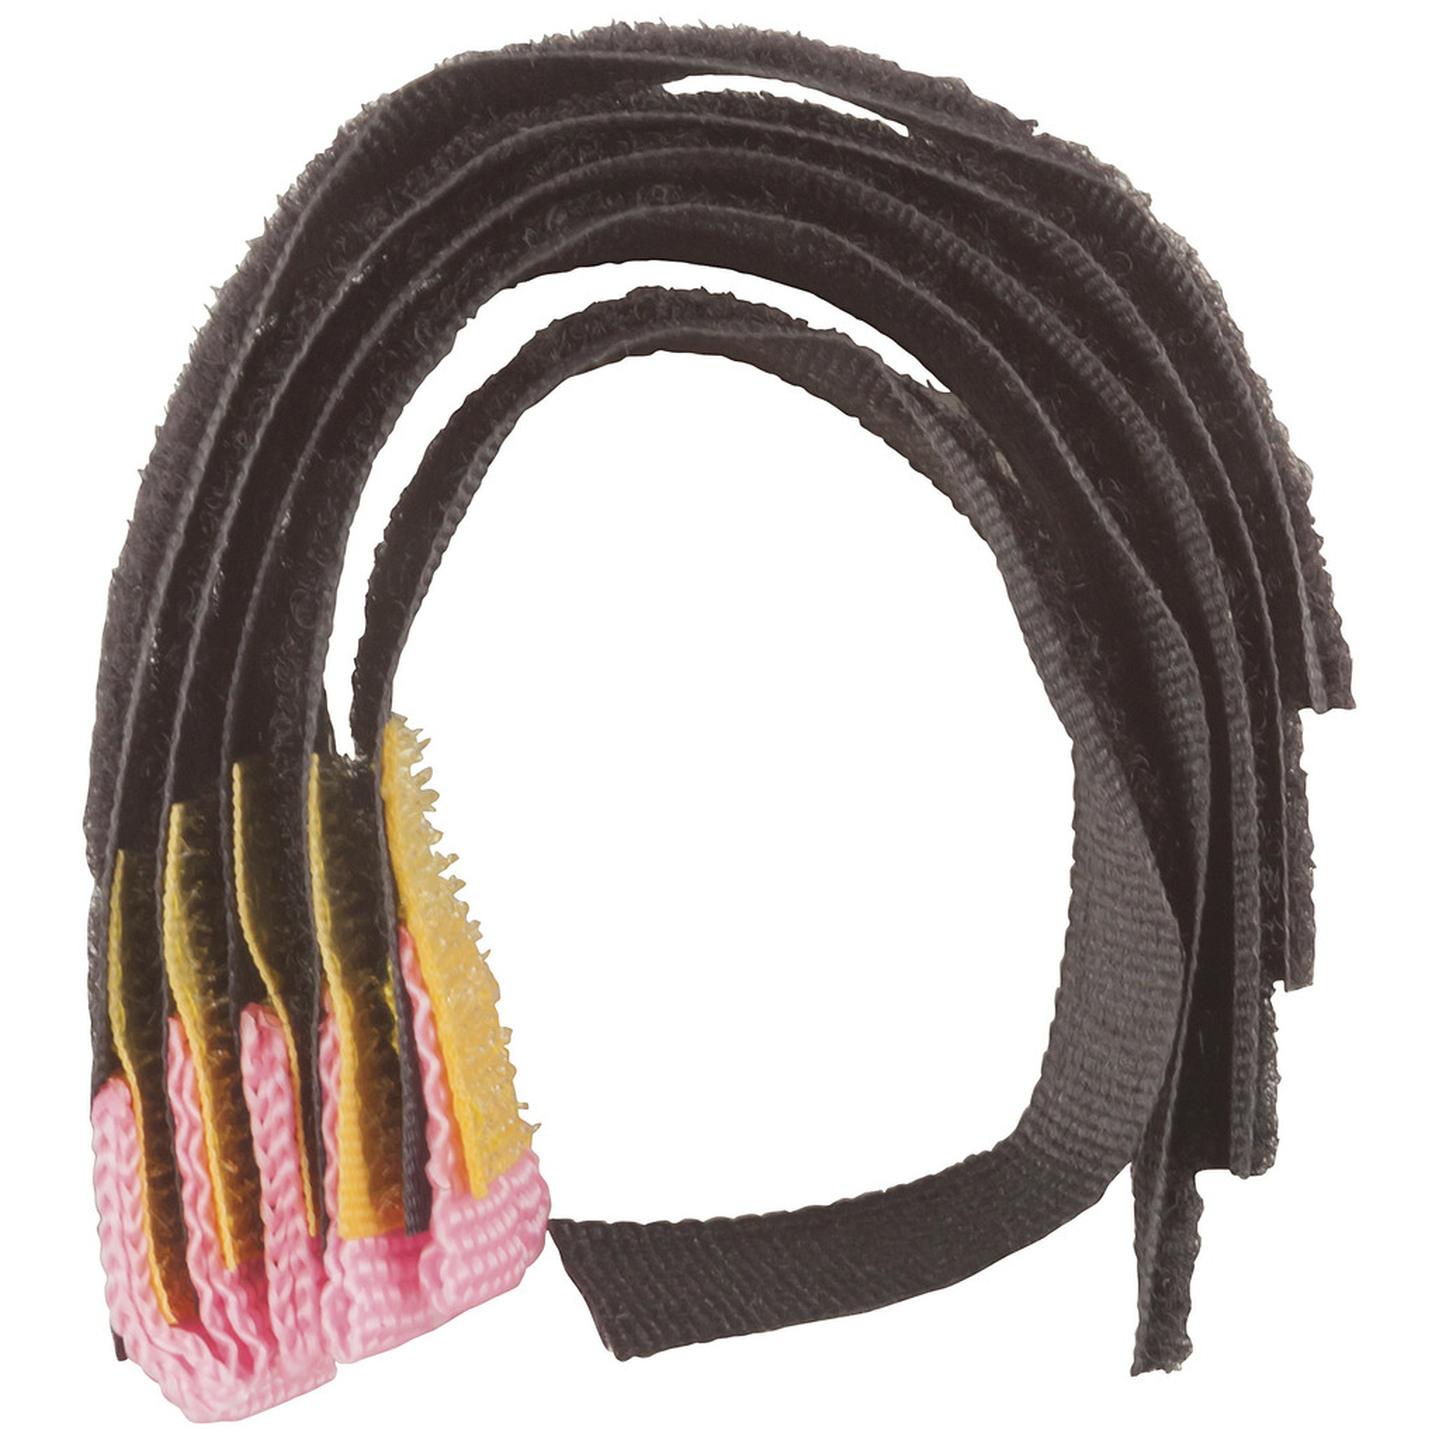 Hook and Loop Cable Ties - Pack of 5